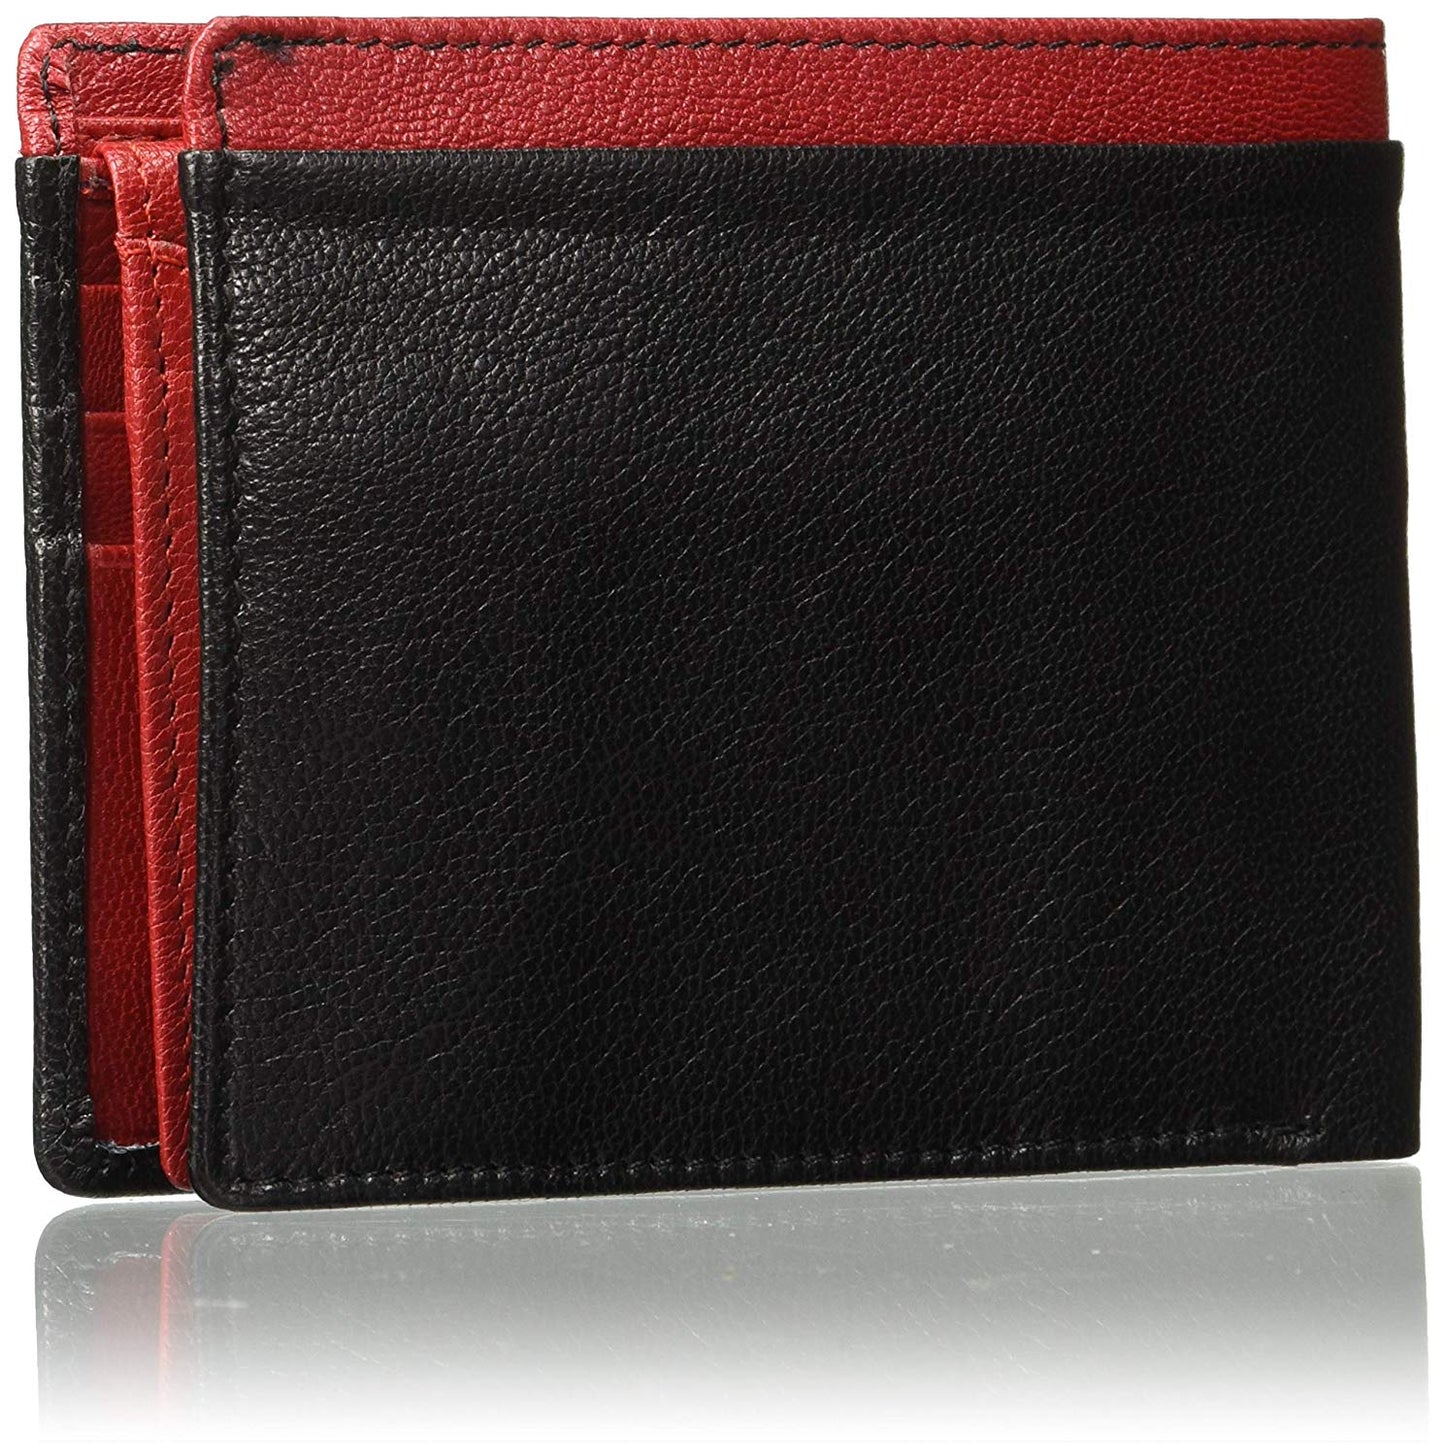 Black Colour Bi-Fold Italian Leather Slim Wallet ( 8 Card Slot + 2 Hidden Compartment + 1 ID Slot + Coin Pocket + Cash Compartment )